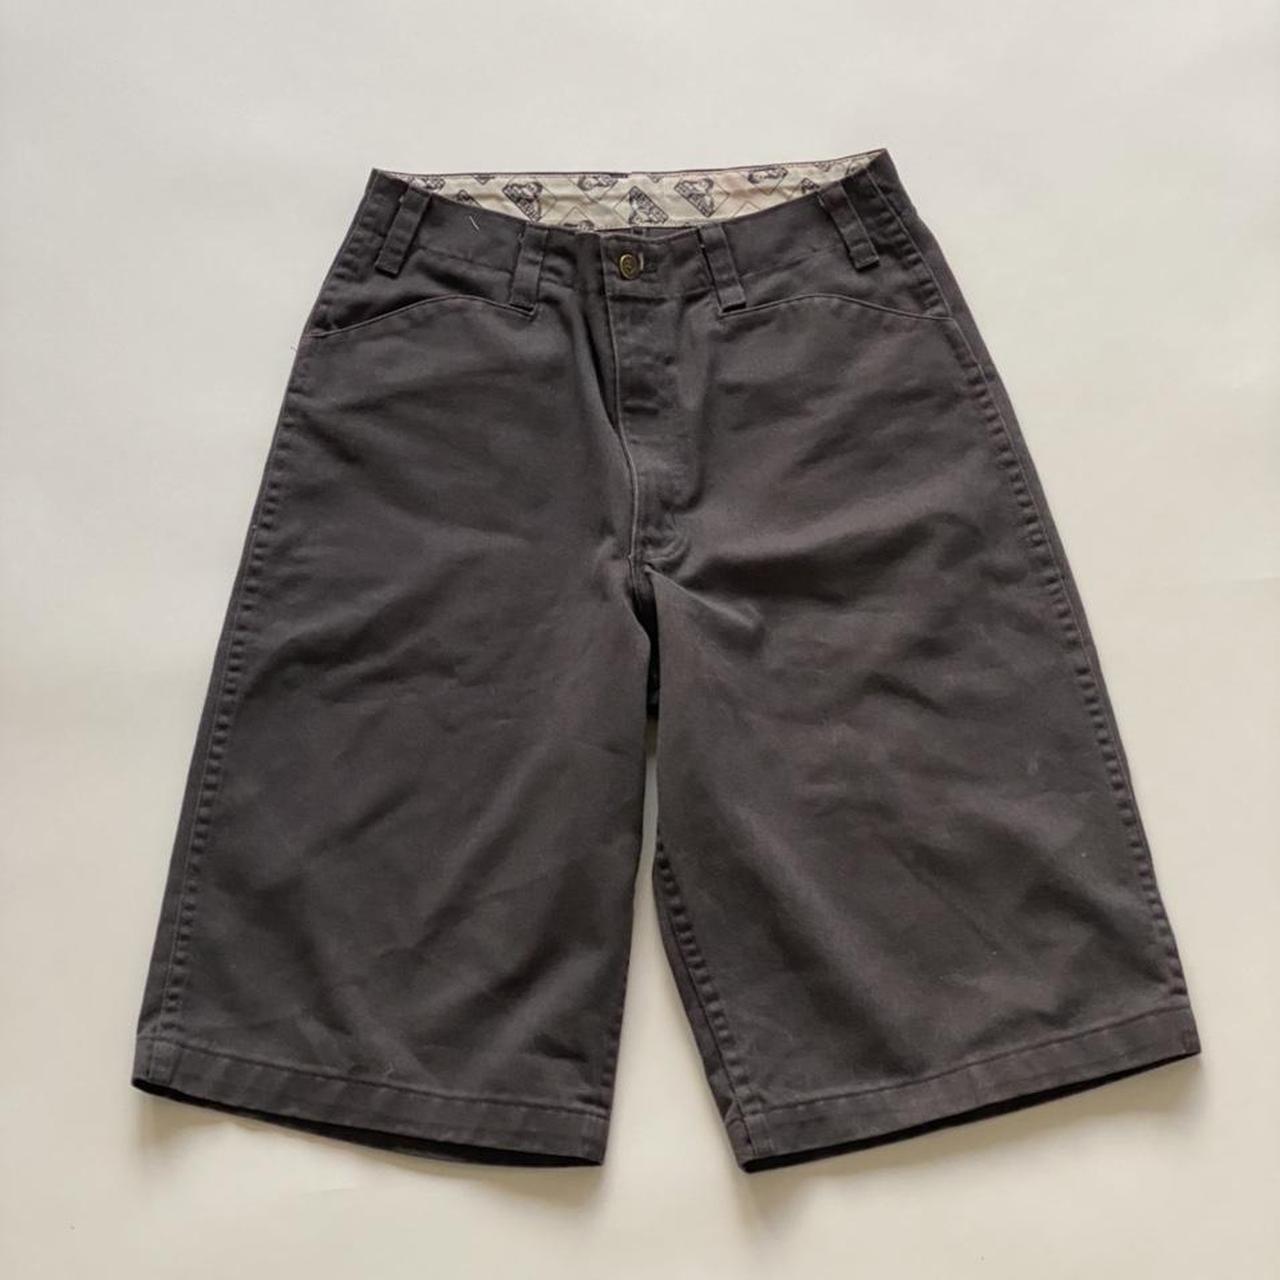 Original Ben Davis shorts Condition: used, good... - Depop